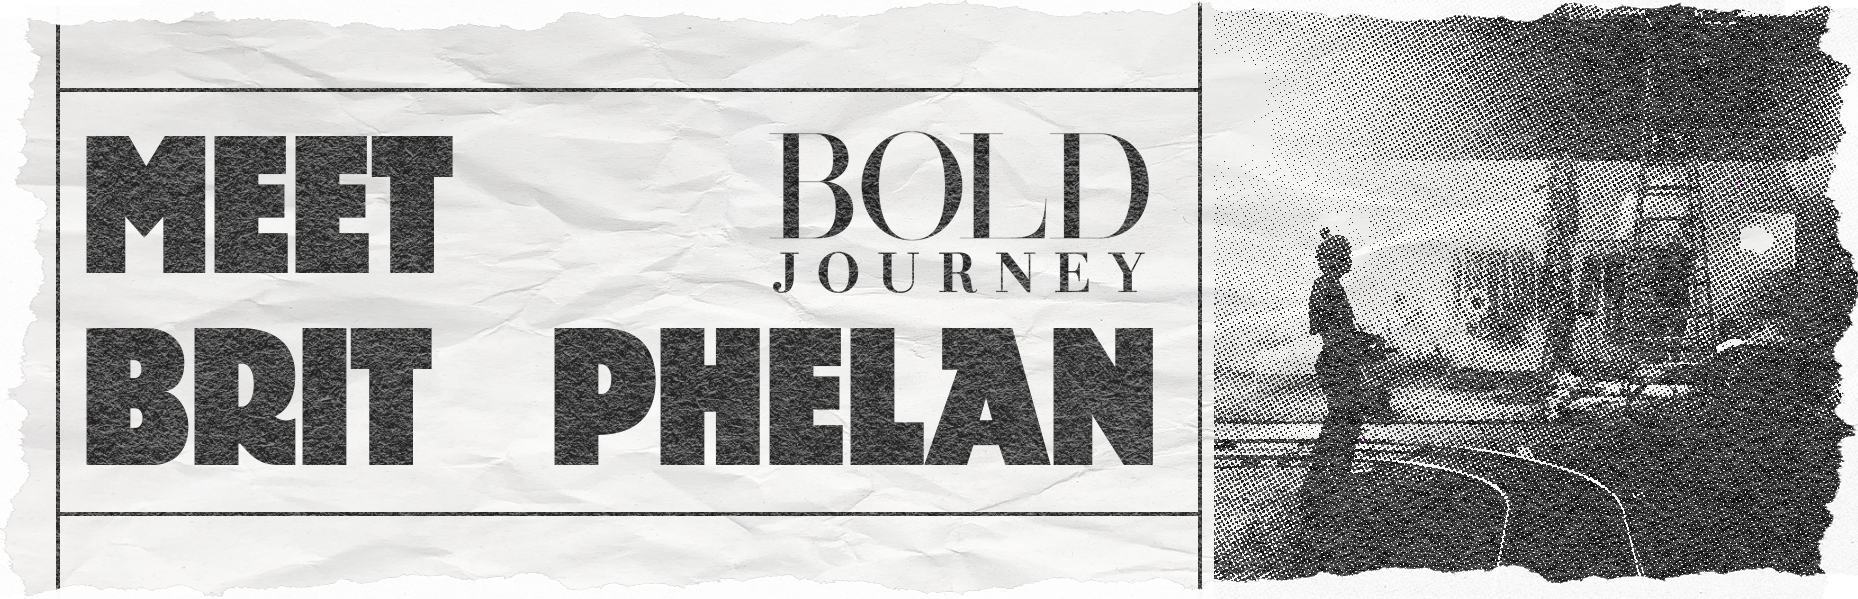 BOLD JOURNEY Meet Brit Phelan